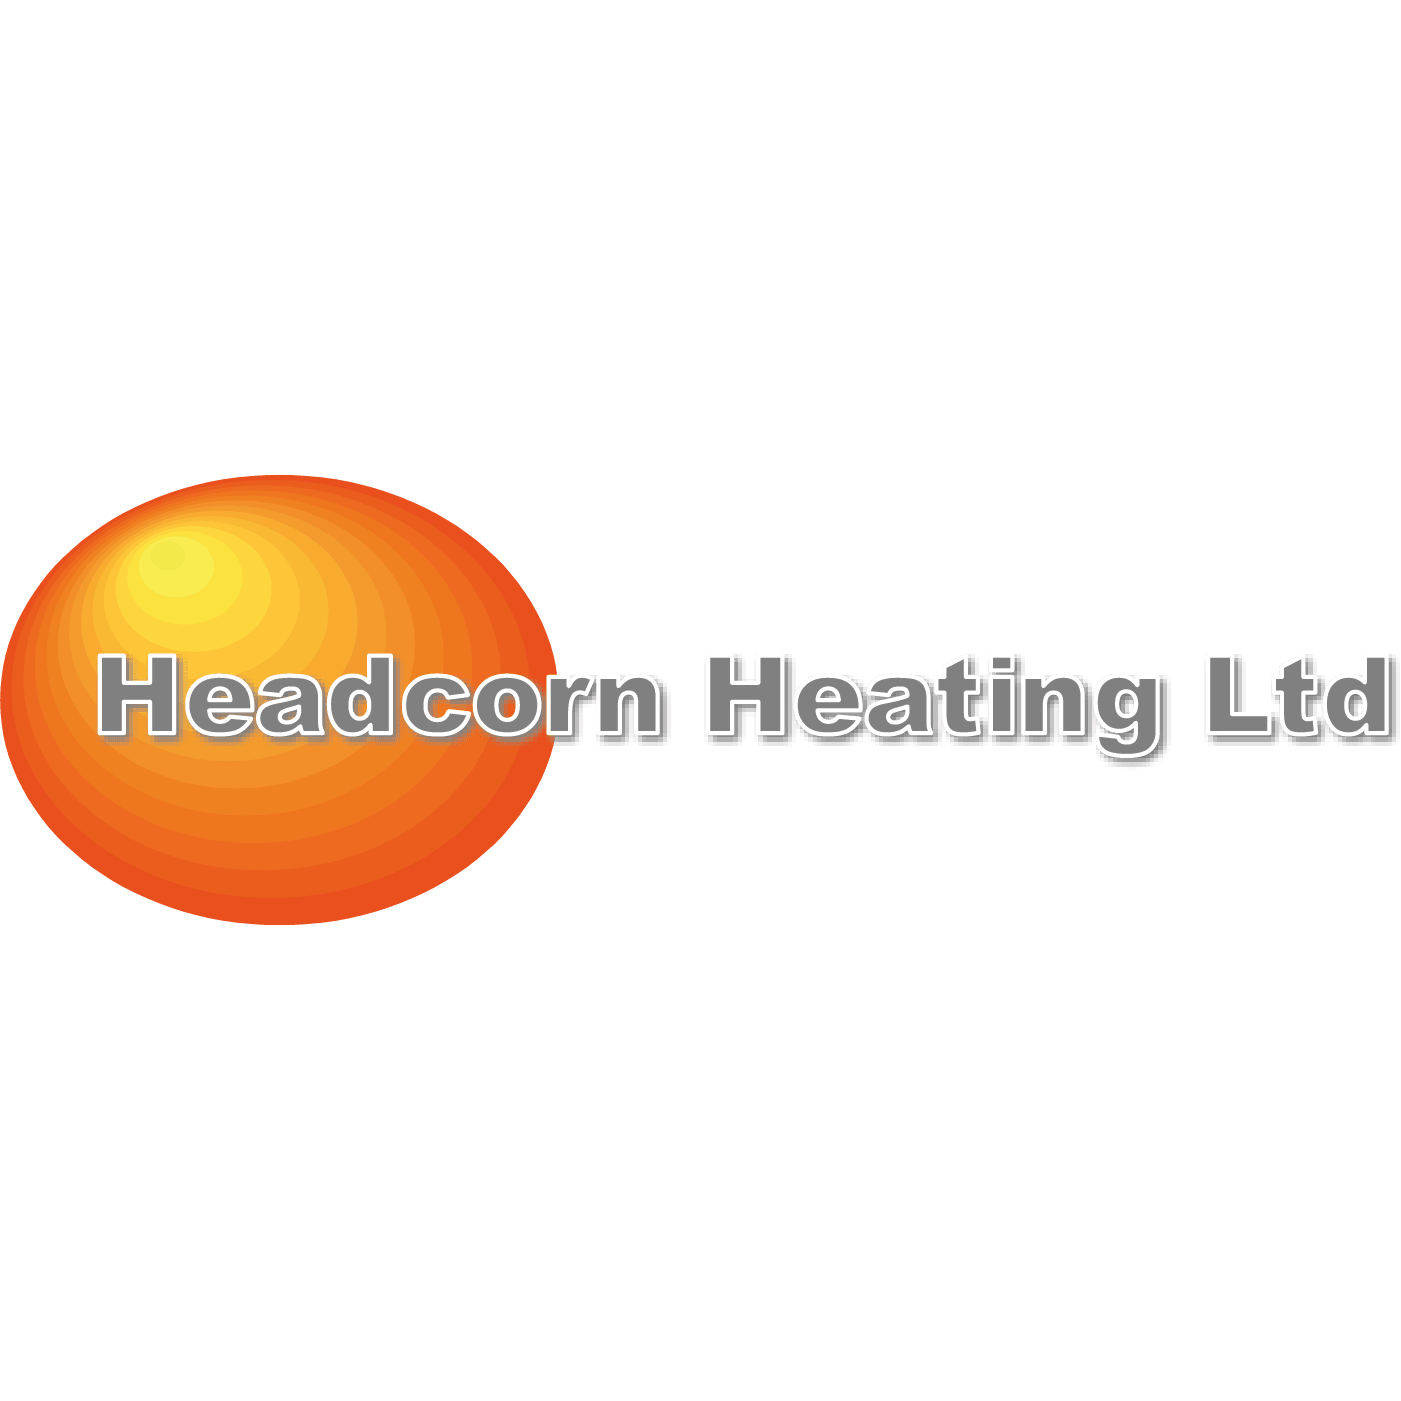 Headcorn Heating Ltd - Ashford, Kent TN27 9LY - 01622 891299 | ShowMeLocal.com